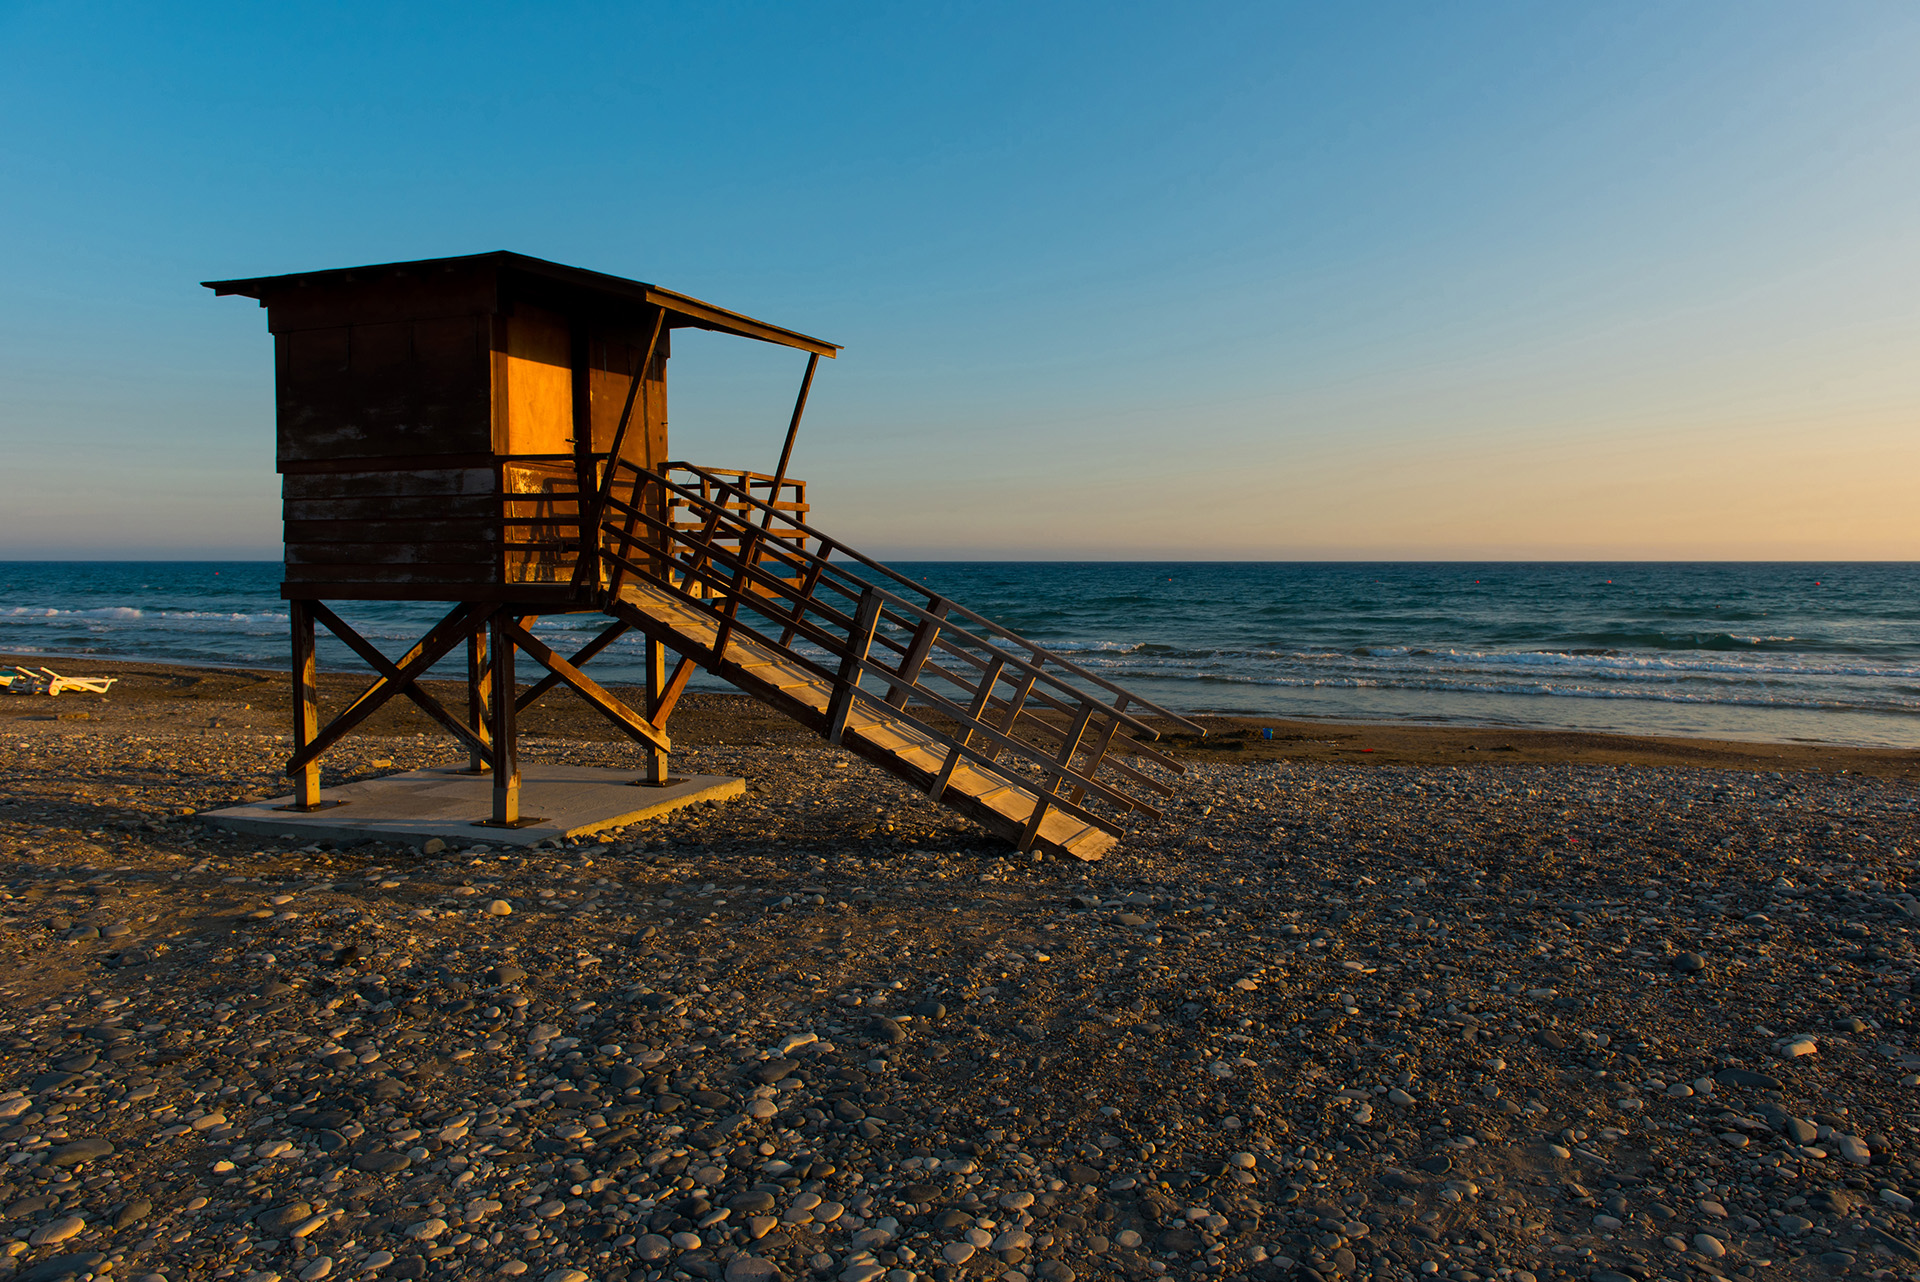 Baywatch-Rettungsturm an einem Strand bei Sonnenuntergang